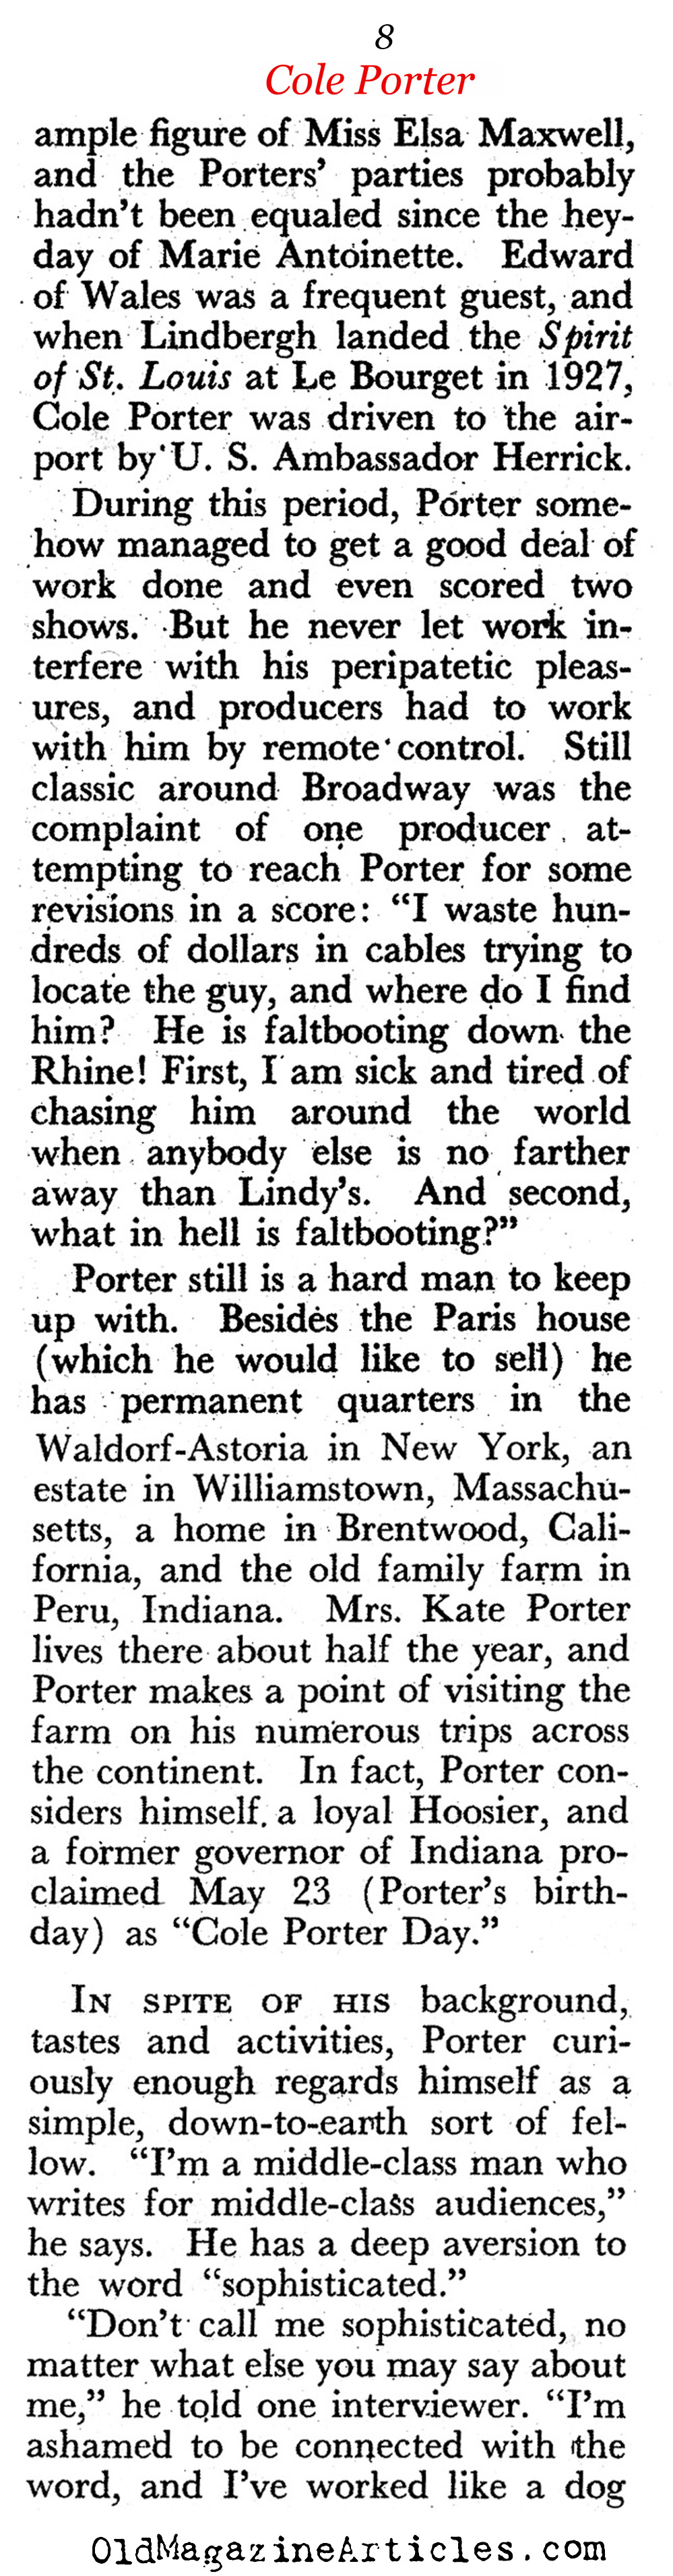 Cole Porter (Pageant Magazine, 1949)